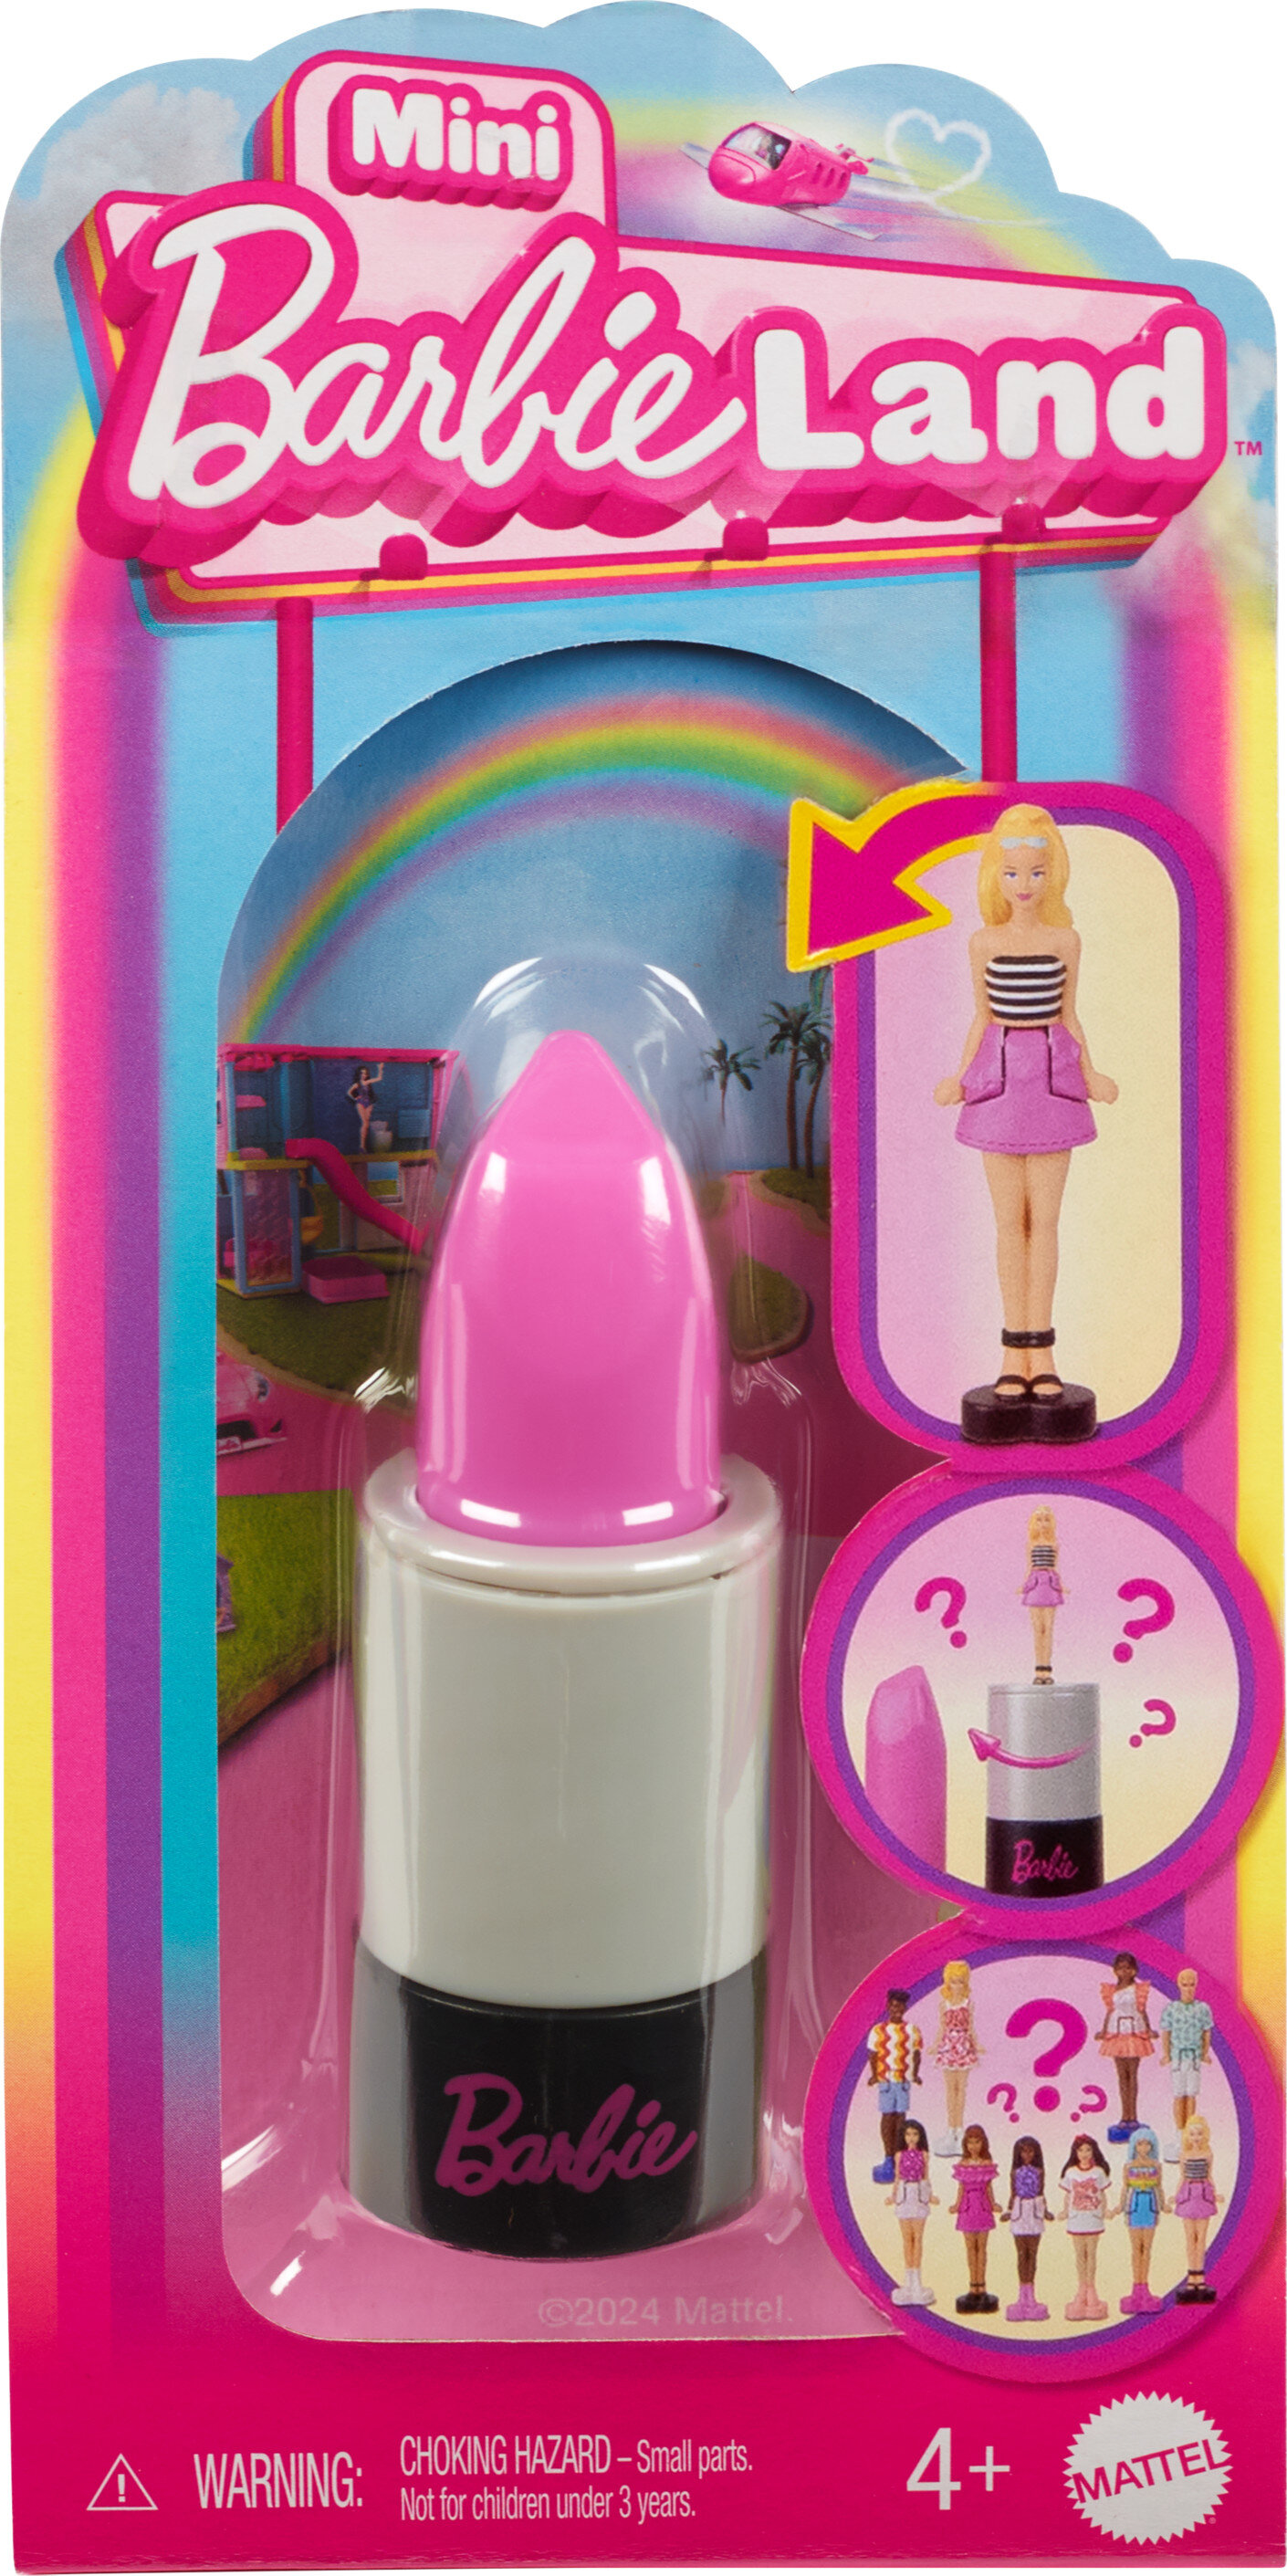 Barbie Mini BarbieLand Fashionistas Dolls, 1.5-inch Mini Dolls in Lipstick Tube, Surprise Reveal (Styles May Vary)